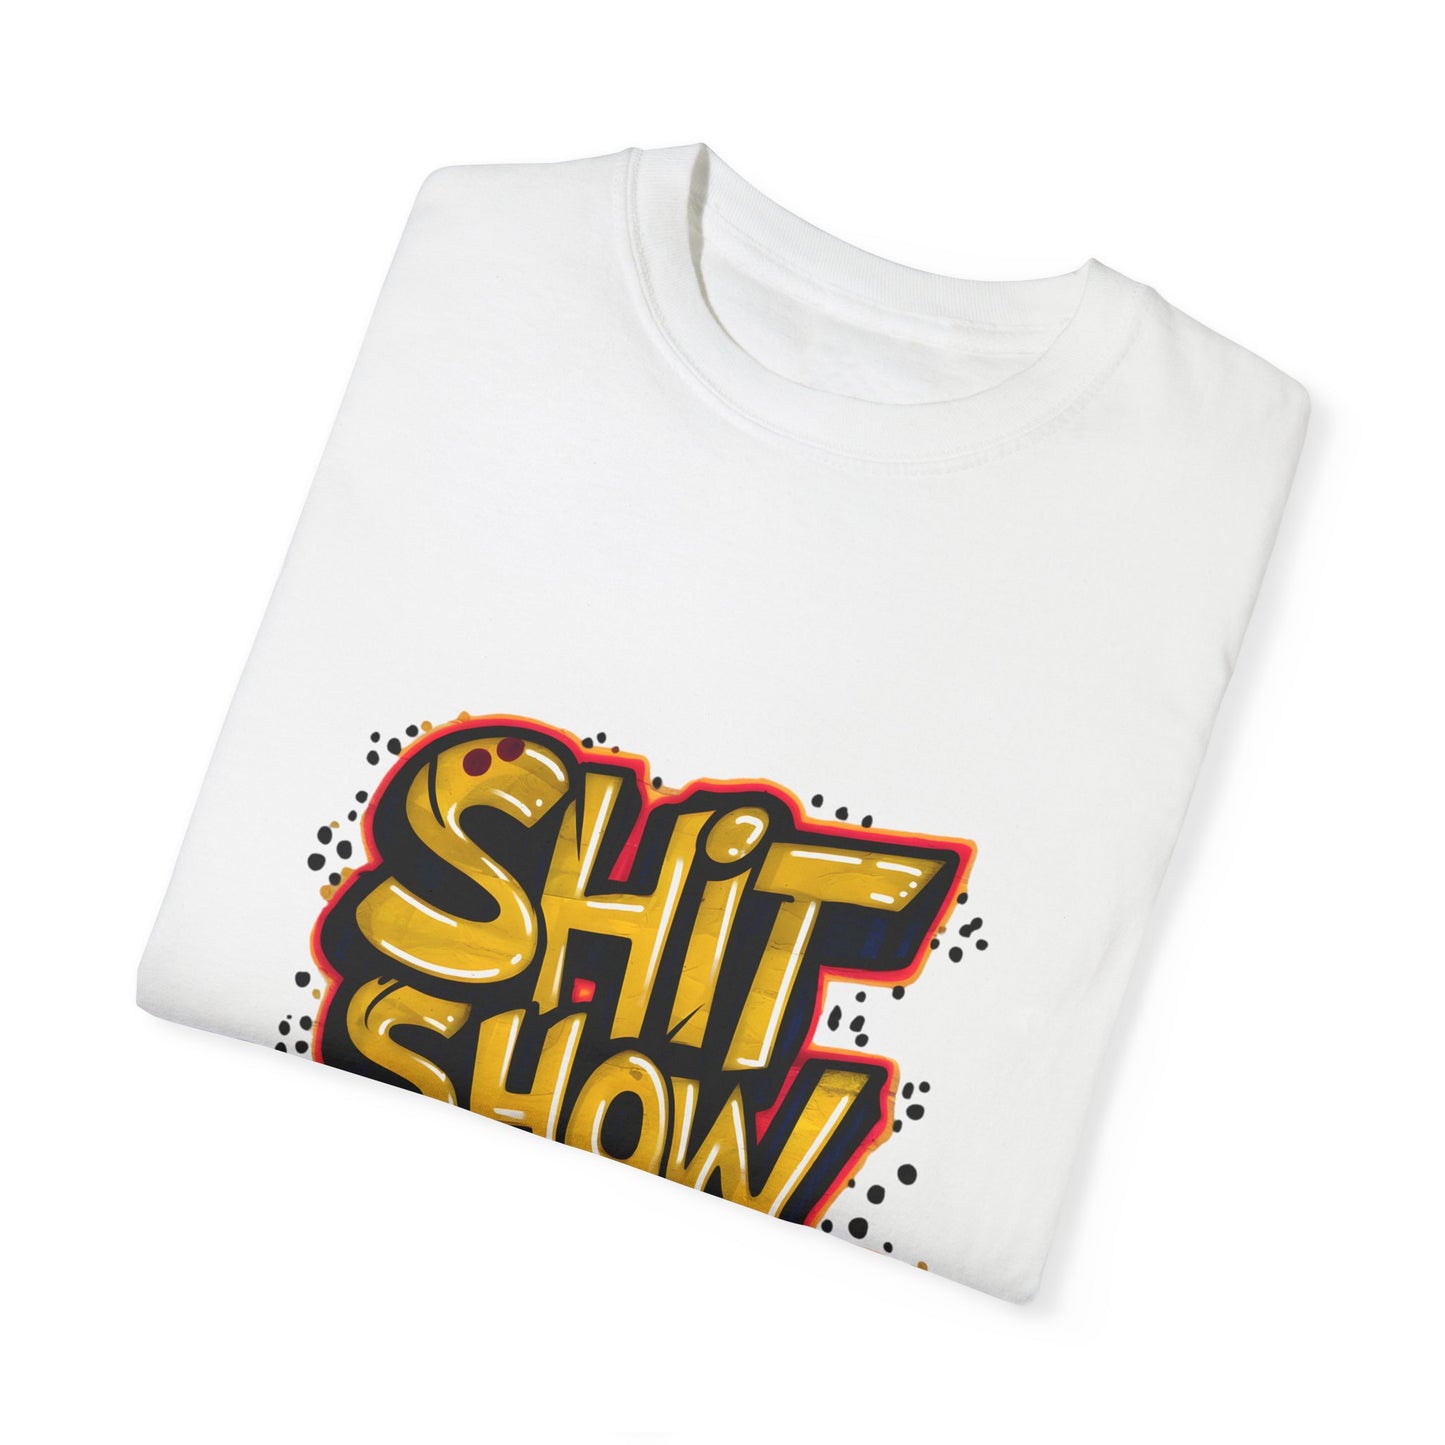 Shit Show Supervisor Urban Sarcastic Graphic Unisex Garment Dyed T-shirt Cotton Funny Humorous Graphic Soft Premium Unisex Men Women White T-shirt Birthday Gift-23